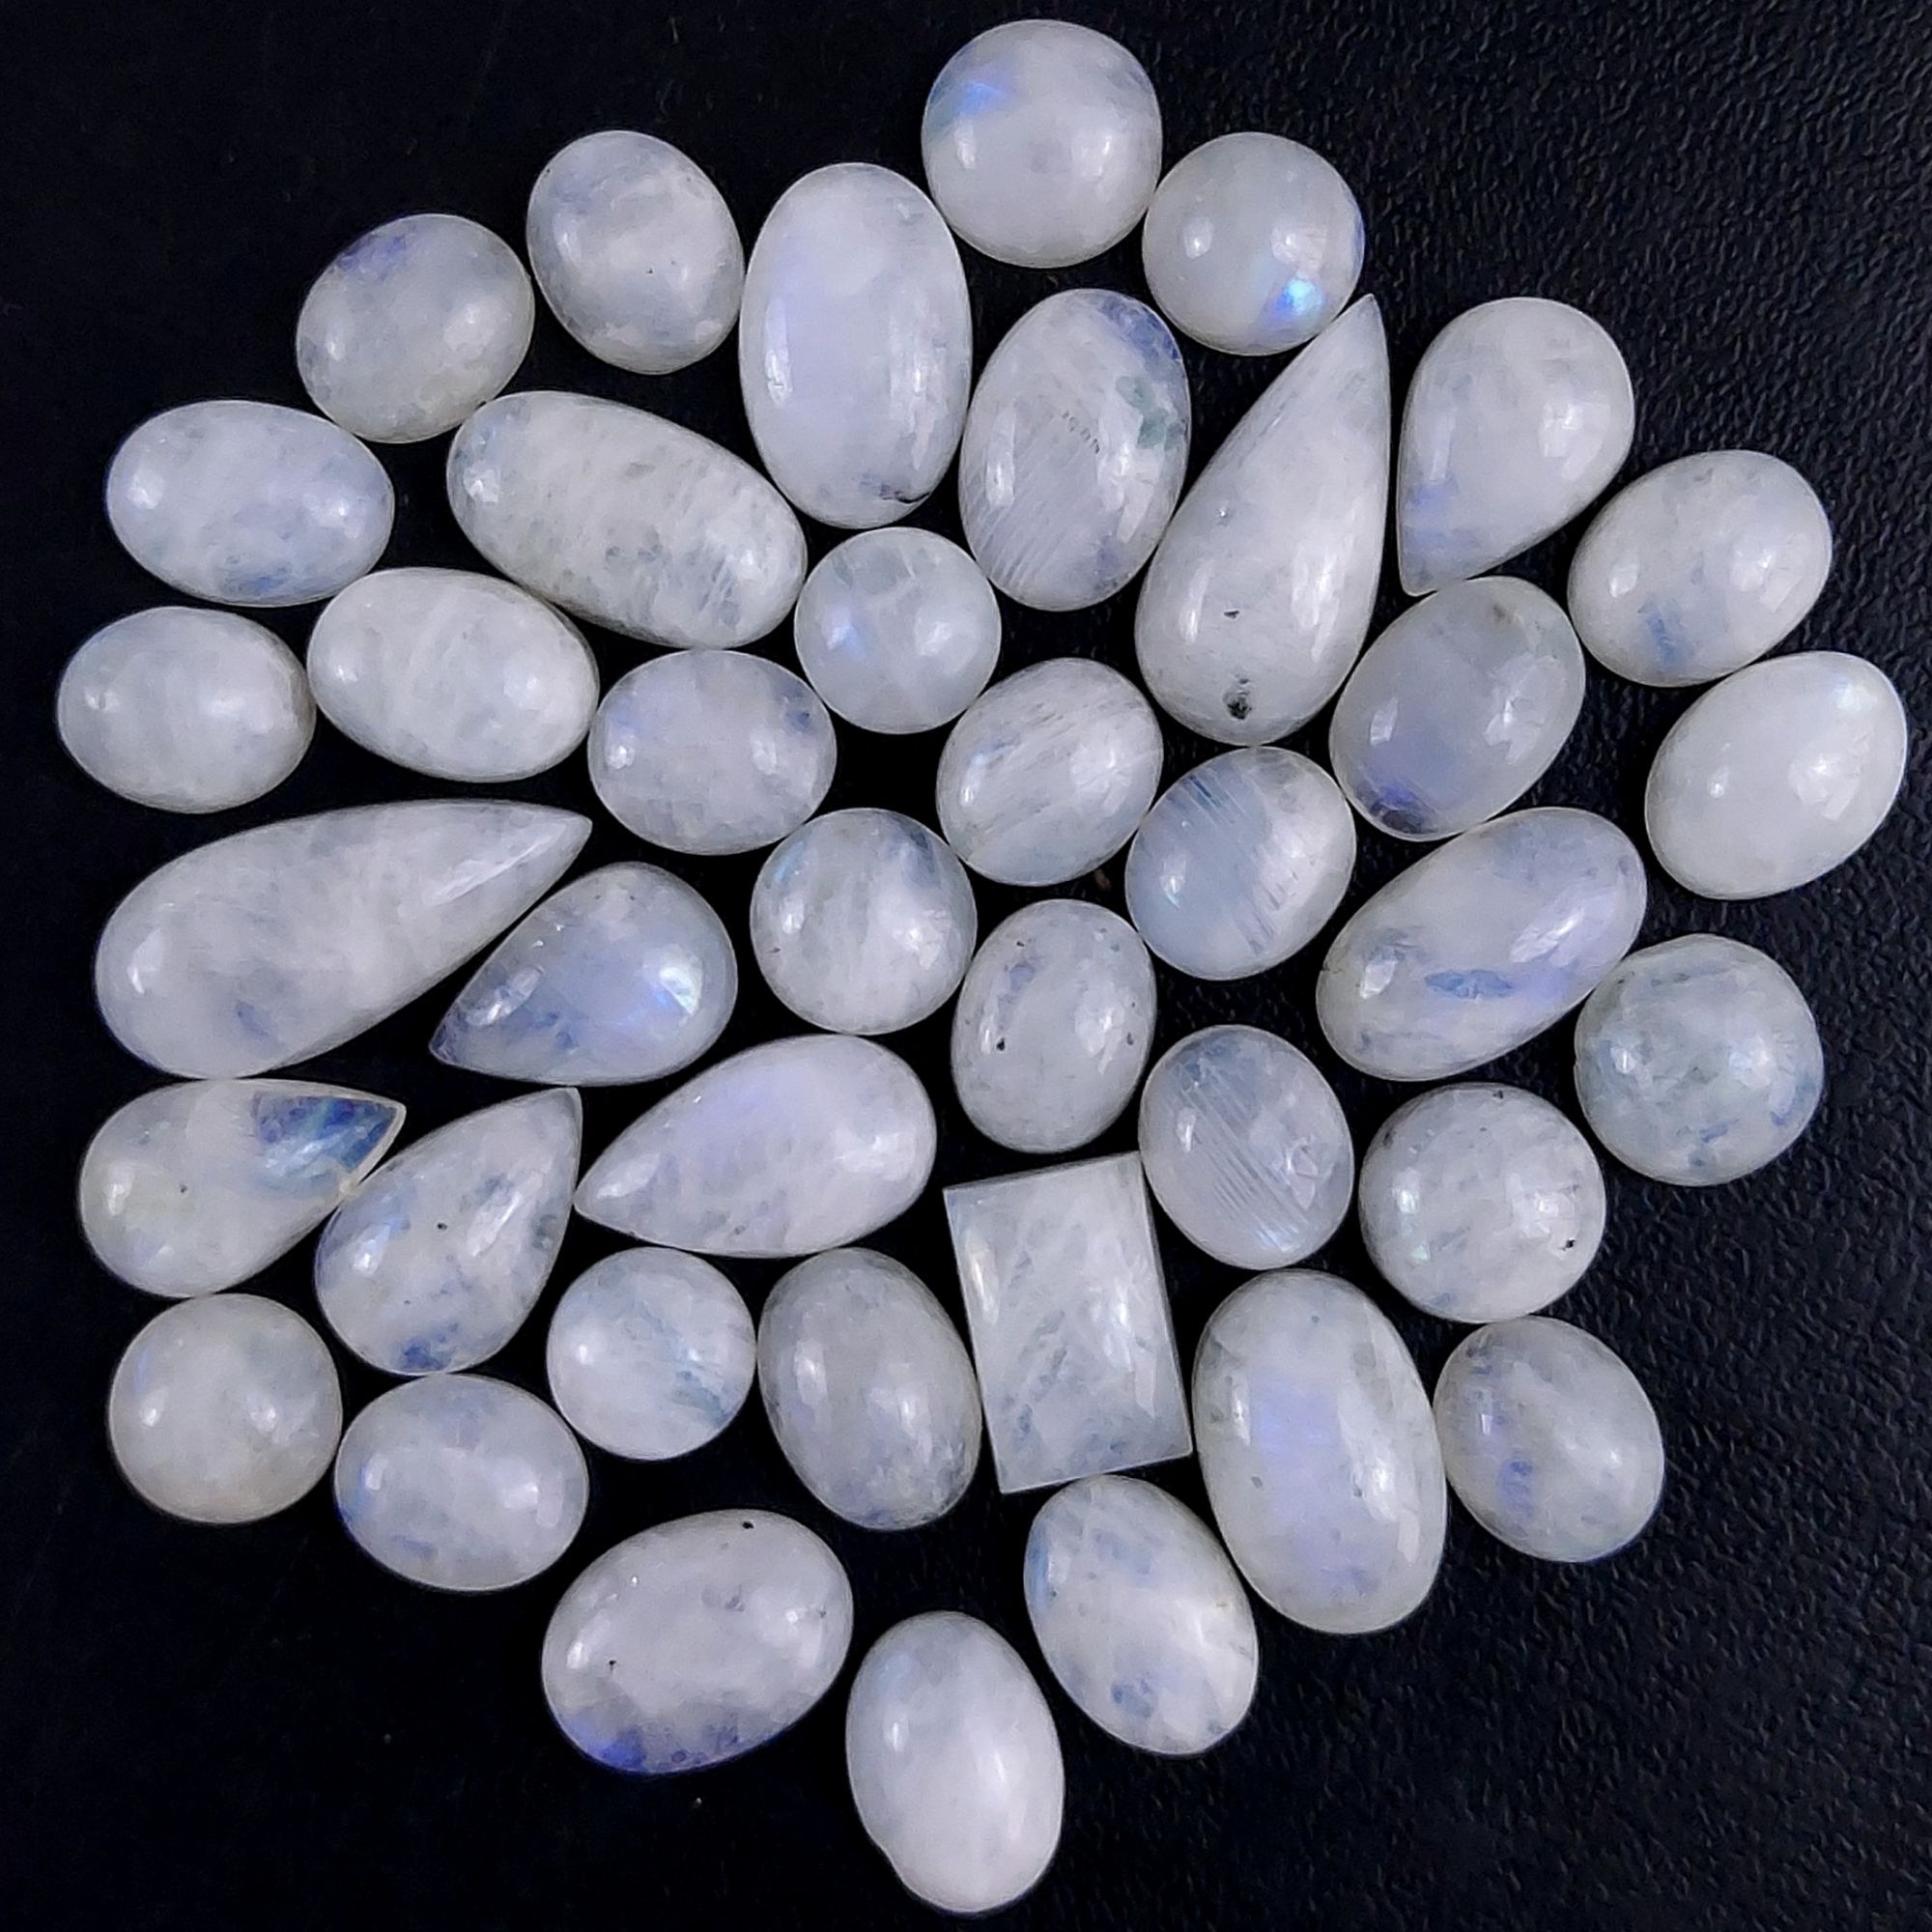 39Pcs 273Cts Natural Rainbow Cabochon Gemstone For Jewelry Making Crystal Cabochon Semi-Precious Rainbow Moonstone Flat Back Gemstone Lot 23x9 7x7mm#700